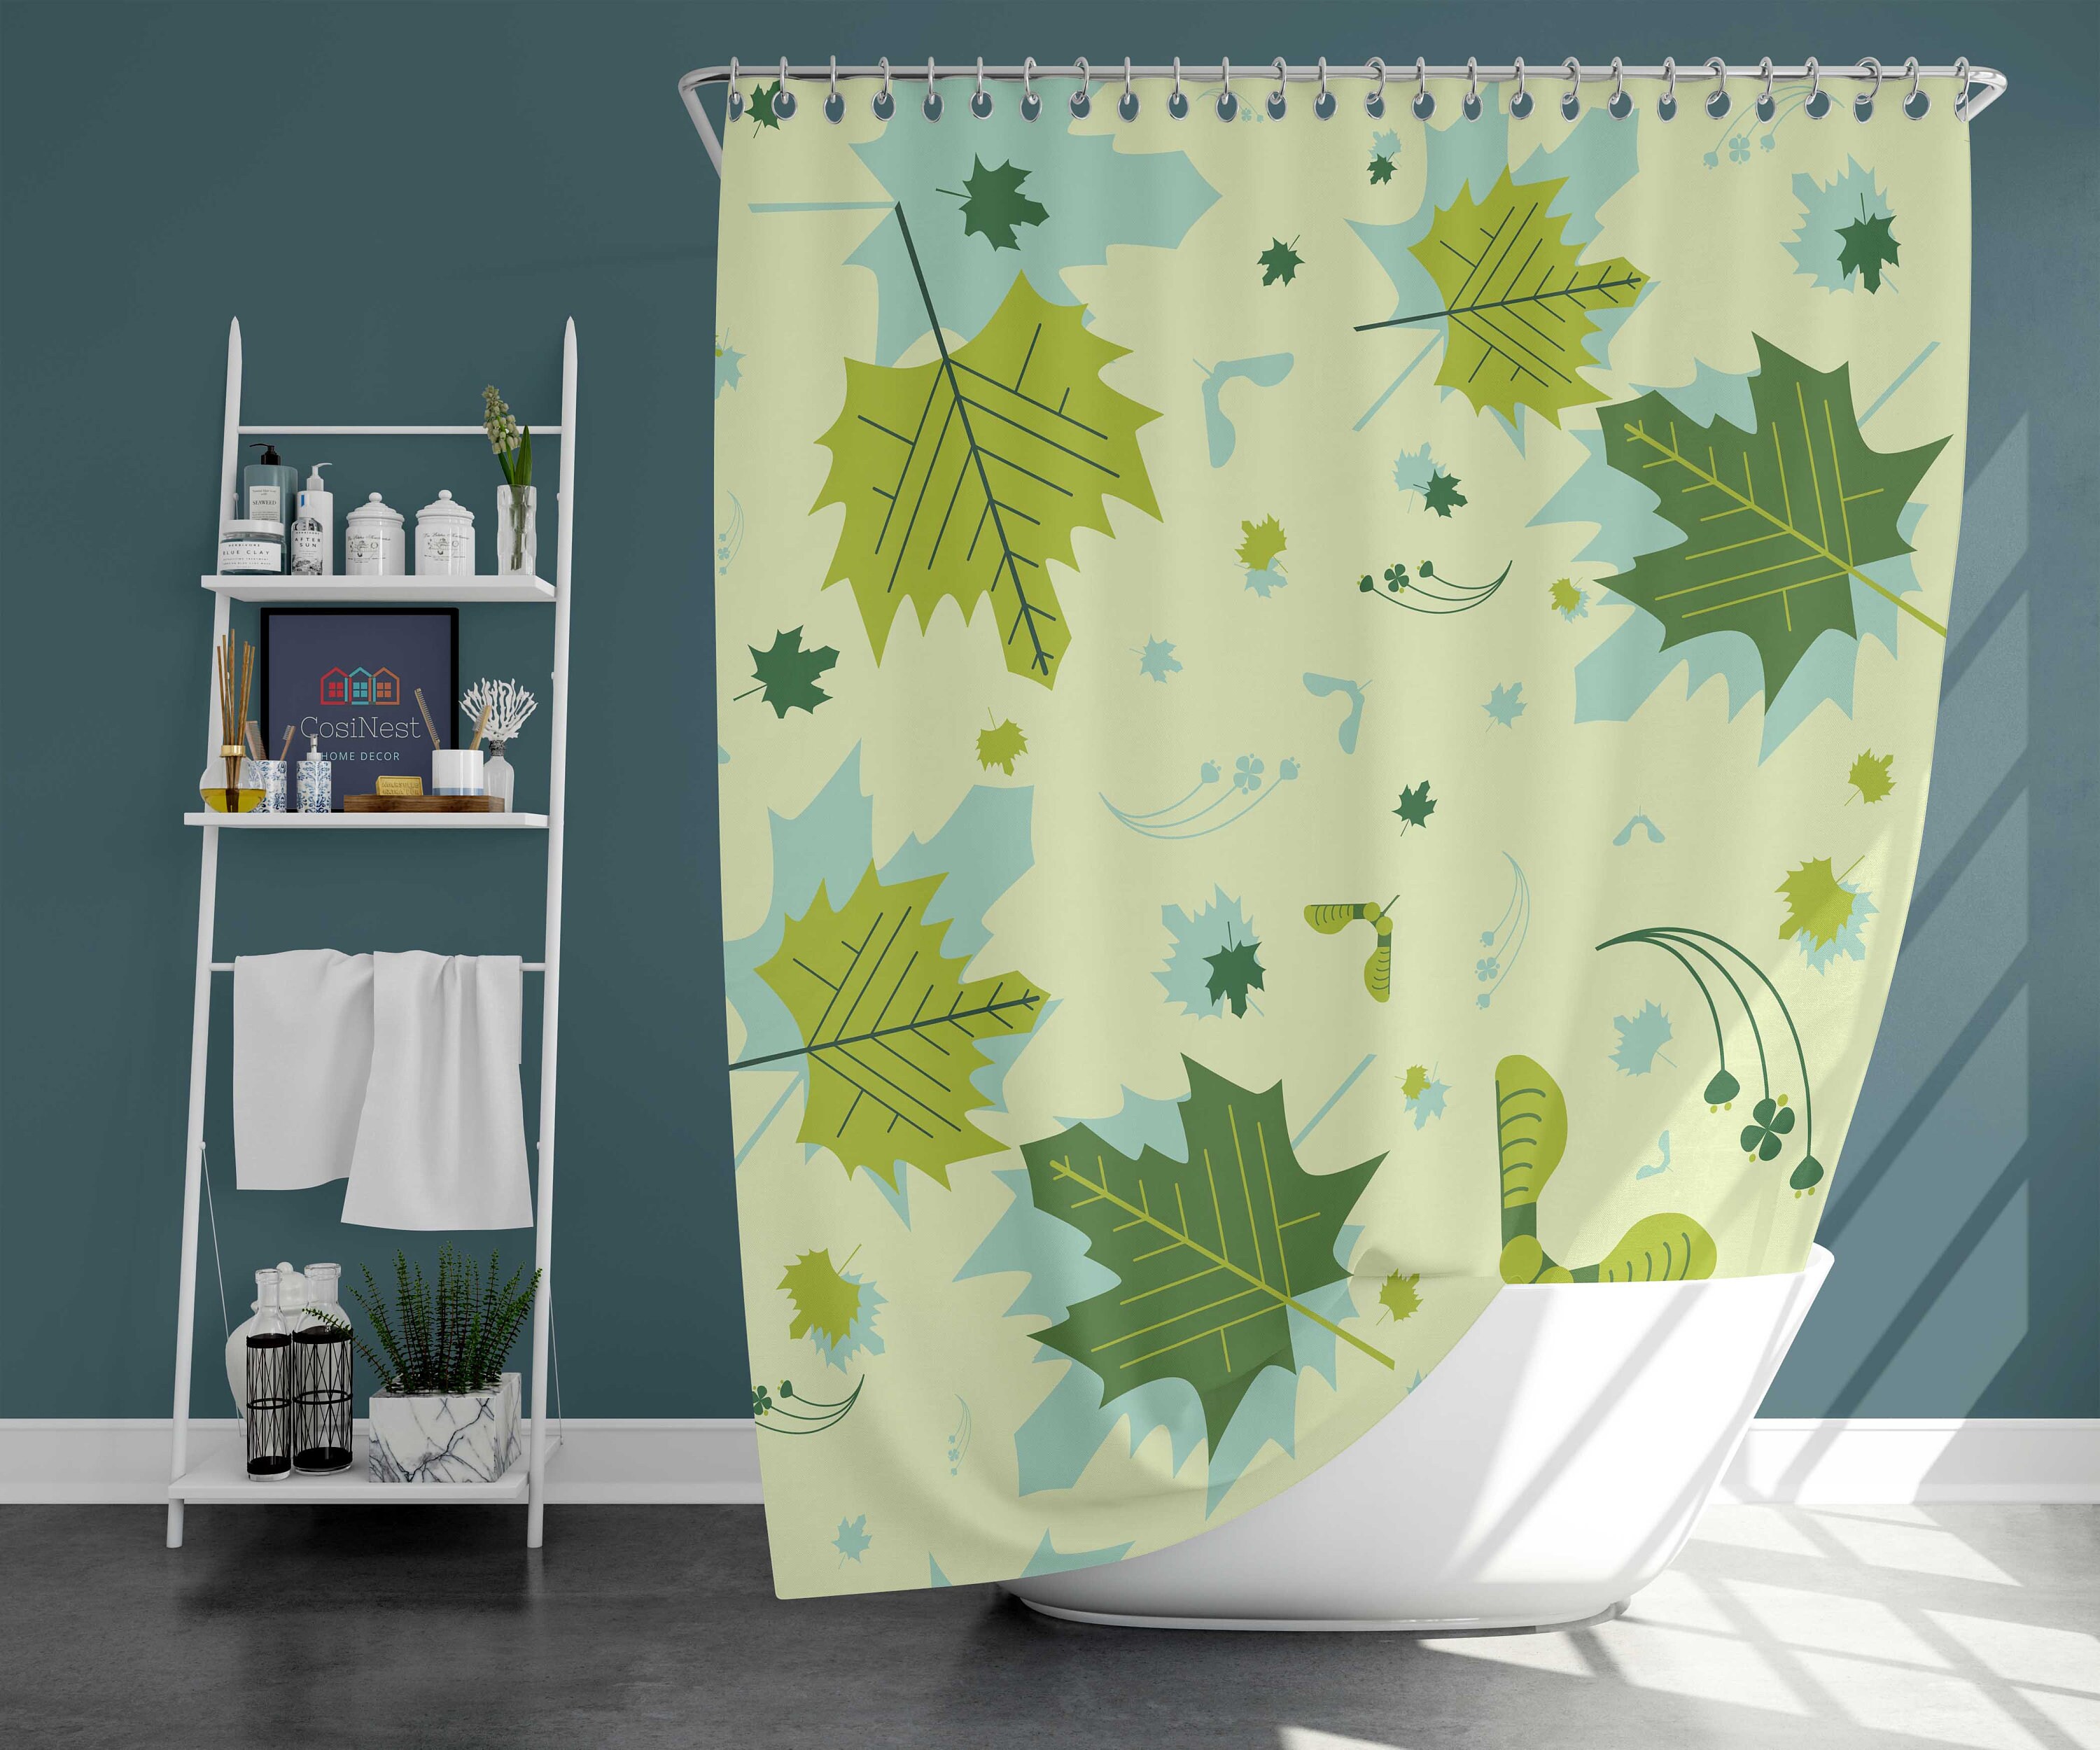 Autumn Shower Curtain Fall Maple Leafs Tree Leaves Cloth Fabric Bath Decor Rug 